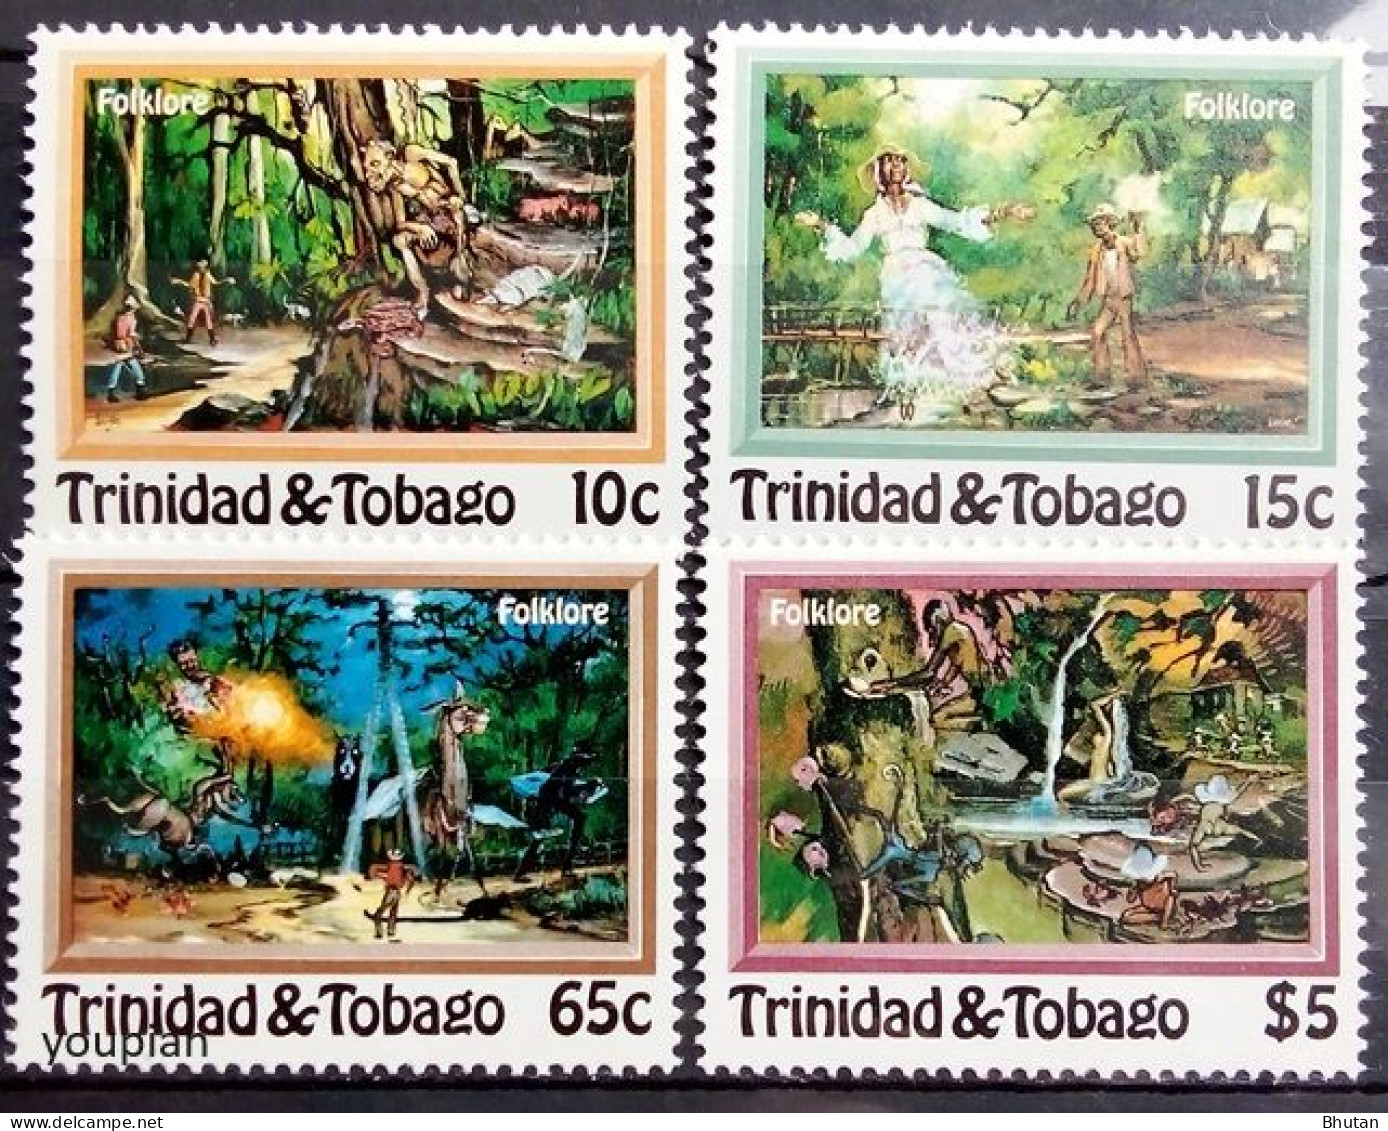 Trinidad And Tobago 1982, Folklore, MNH Stamps Set - Trindad & Tobago (1962-...)